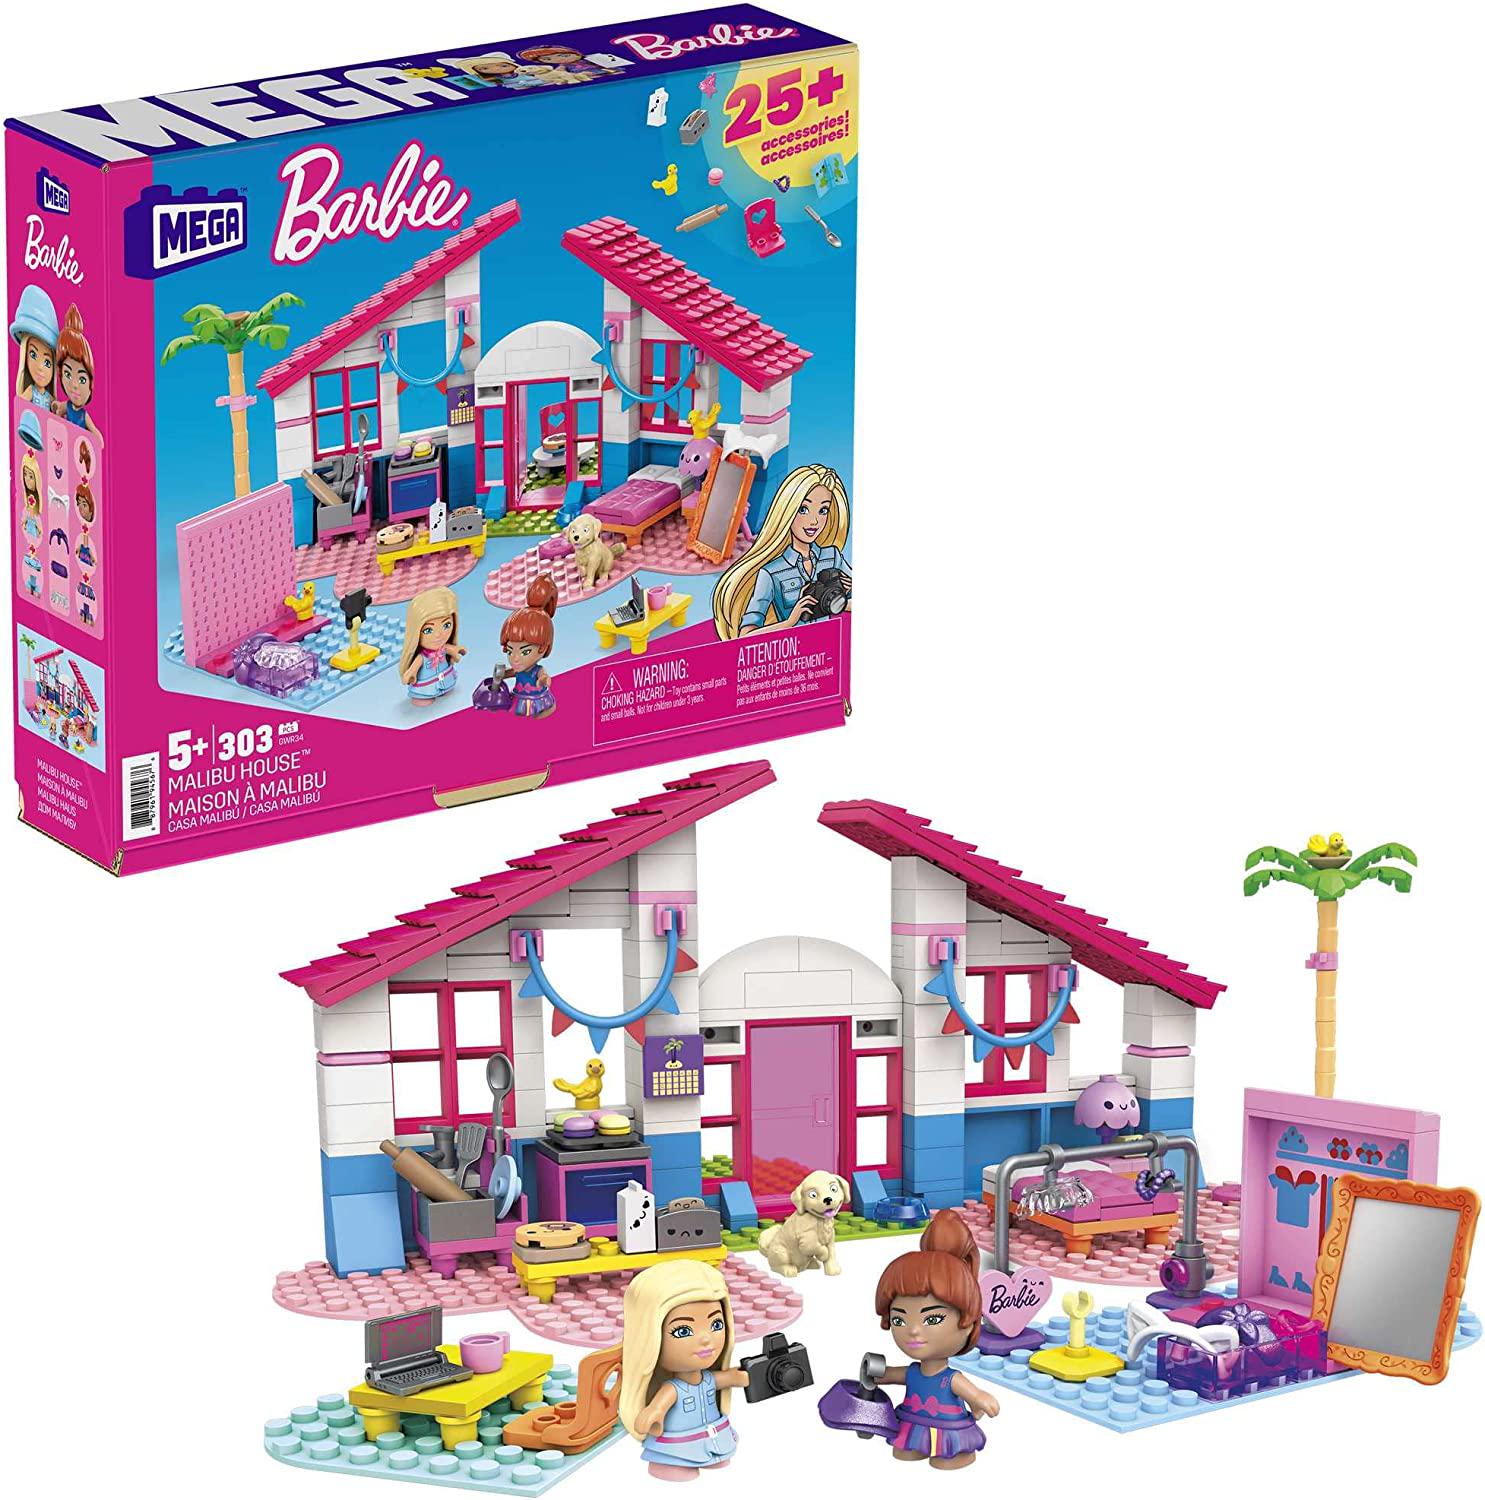 Barbie, Mega Construx Barbie Malibu House